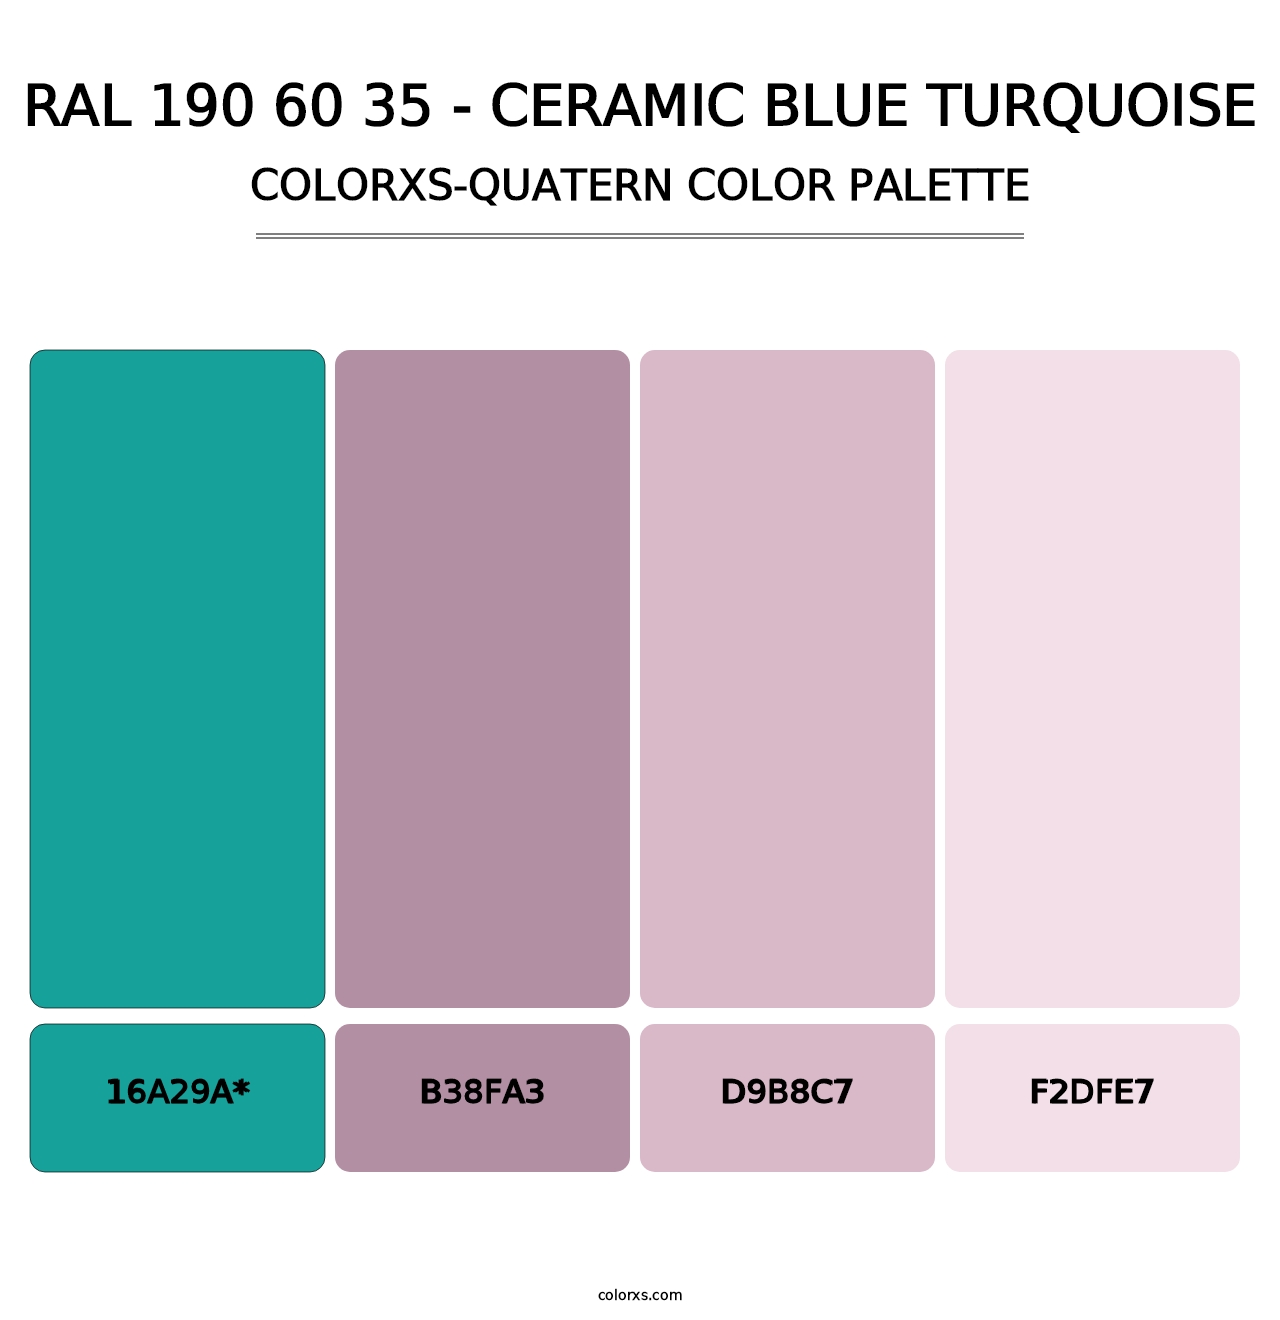 RAL 190 60 35 - Ceramic Blue Turquoise - Colorxs Quatern Palette